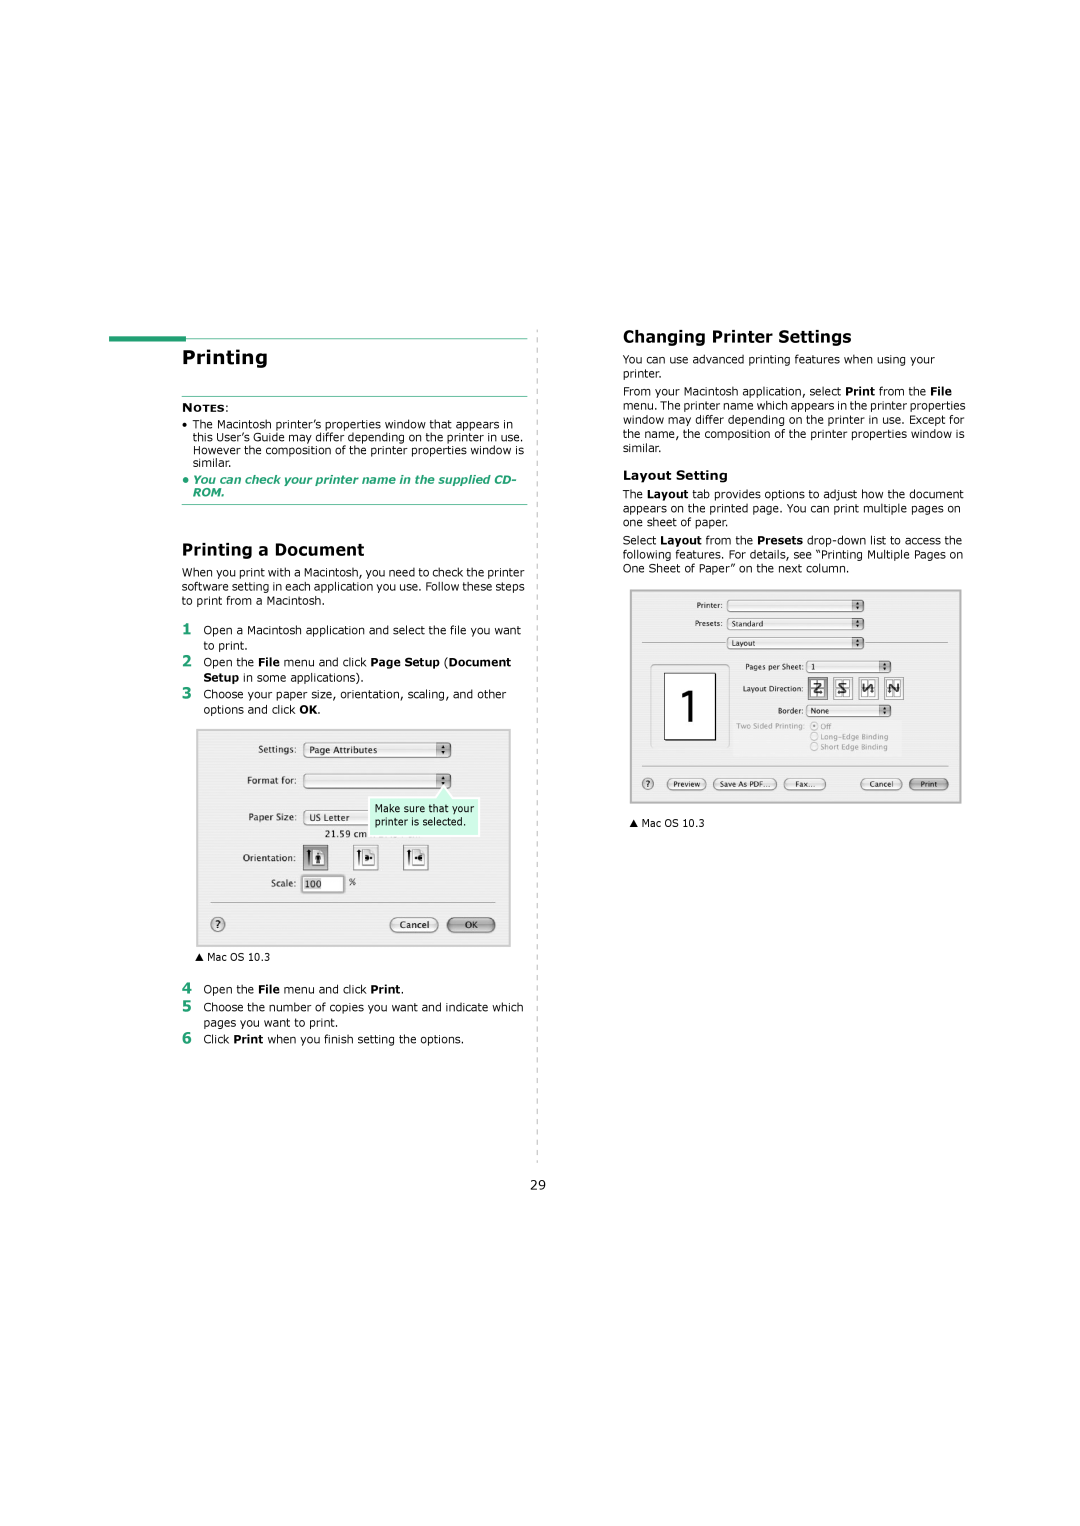 Xerox 3119 manual Printing a Document, Changing Printer Settings 